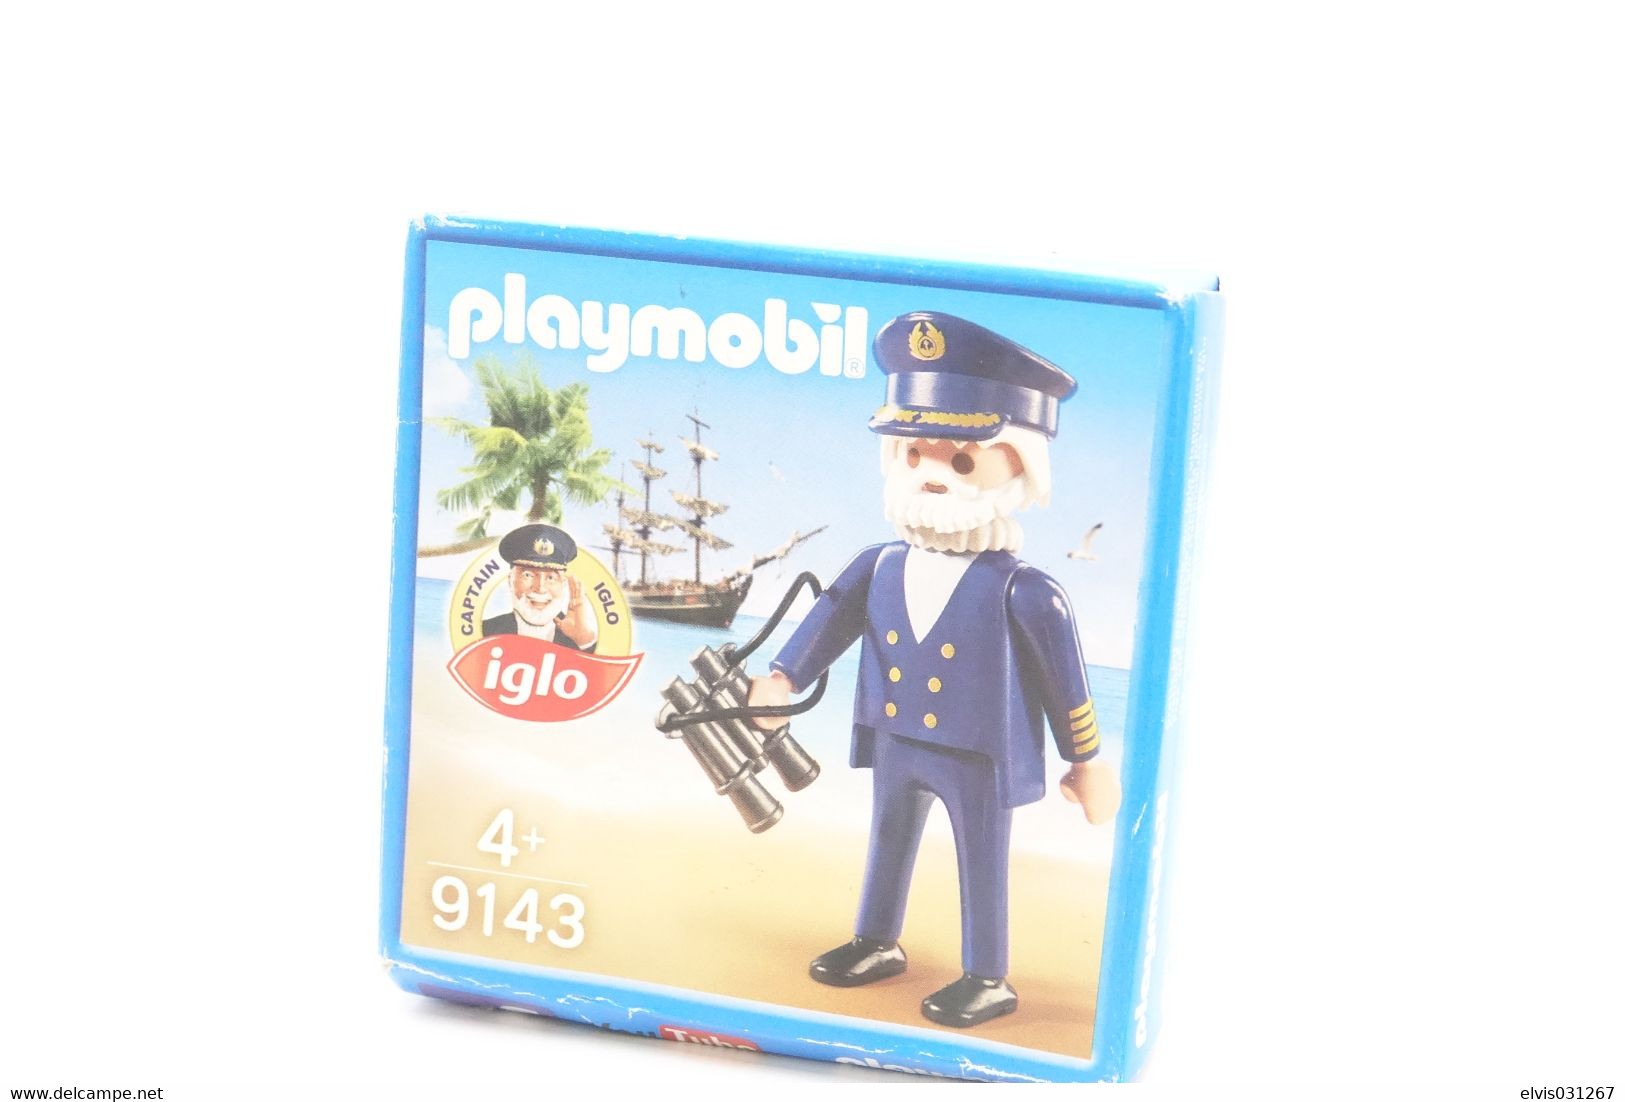 PLAYMOBIL - 9143 Captain Iglo With Original Box - Original Playmobil - Vintage - Catálogos